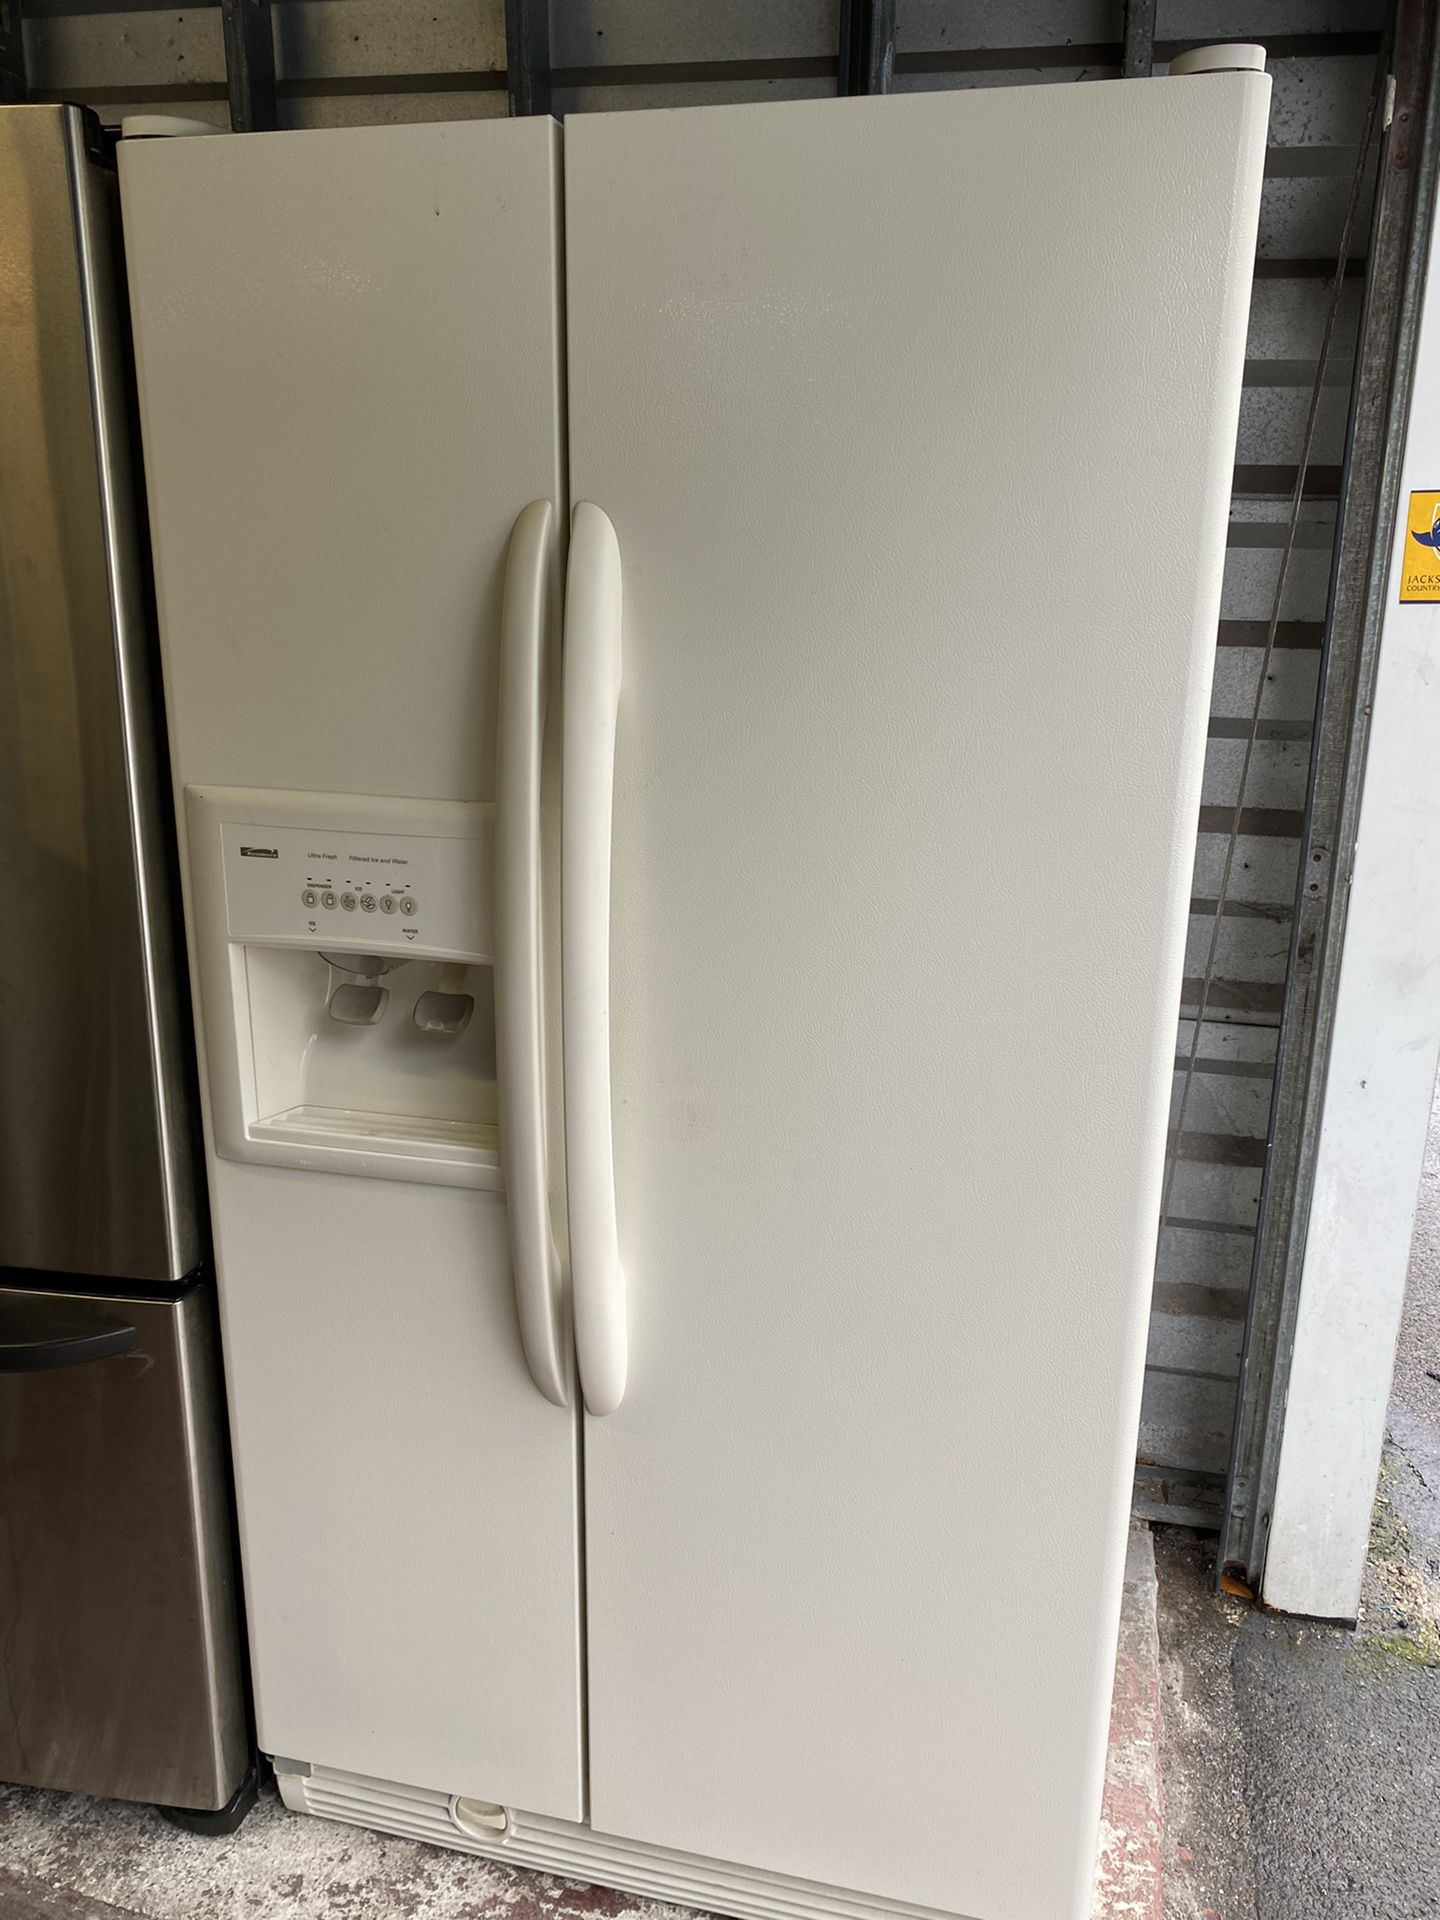 side by side refrigerator